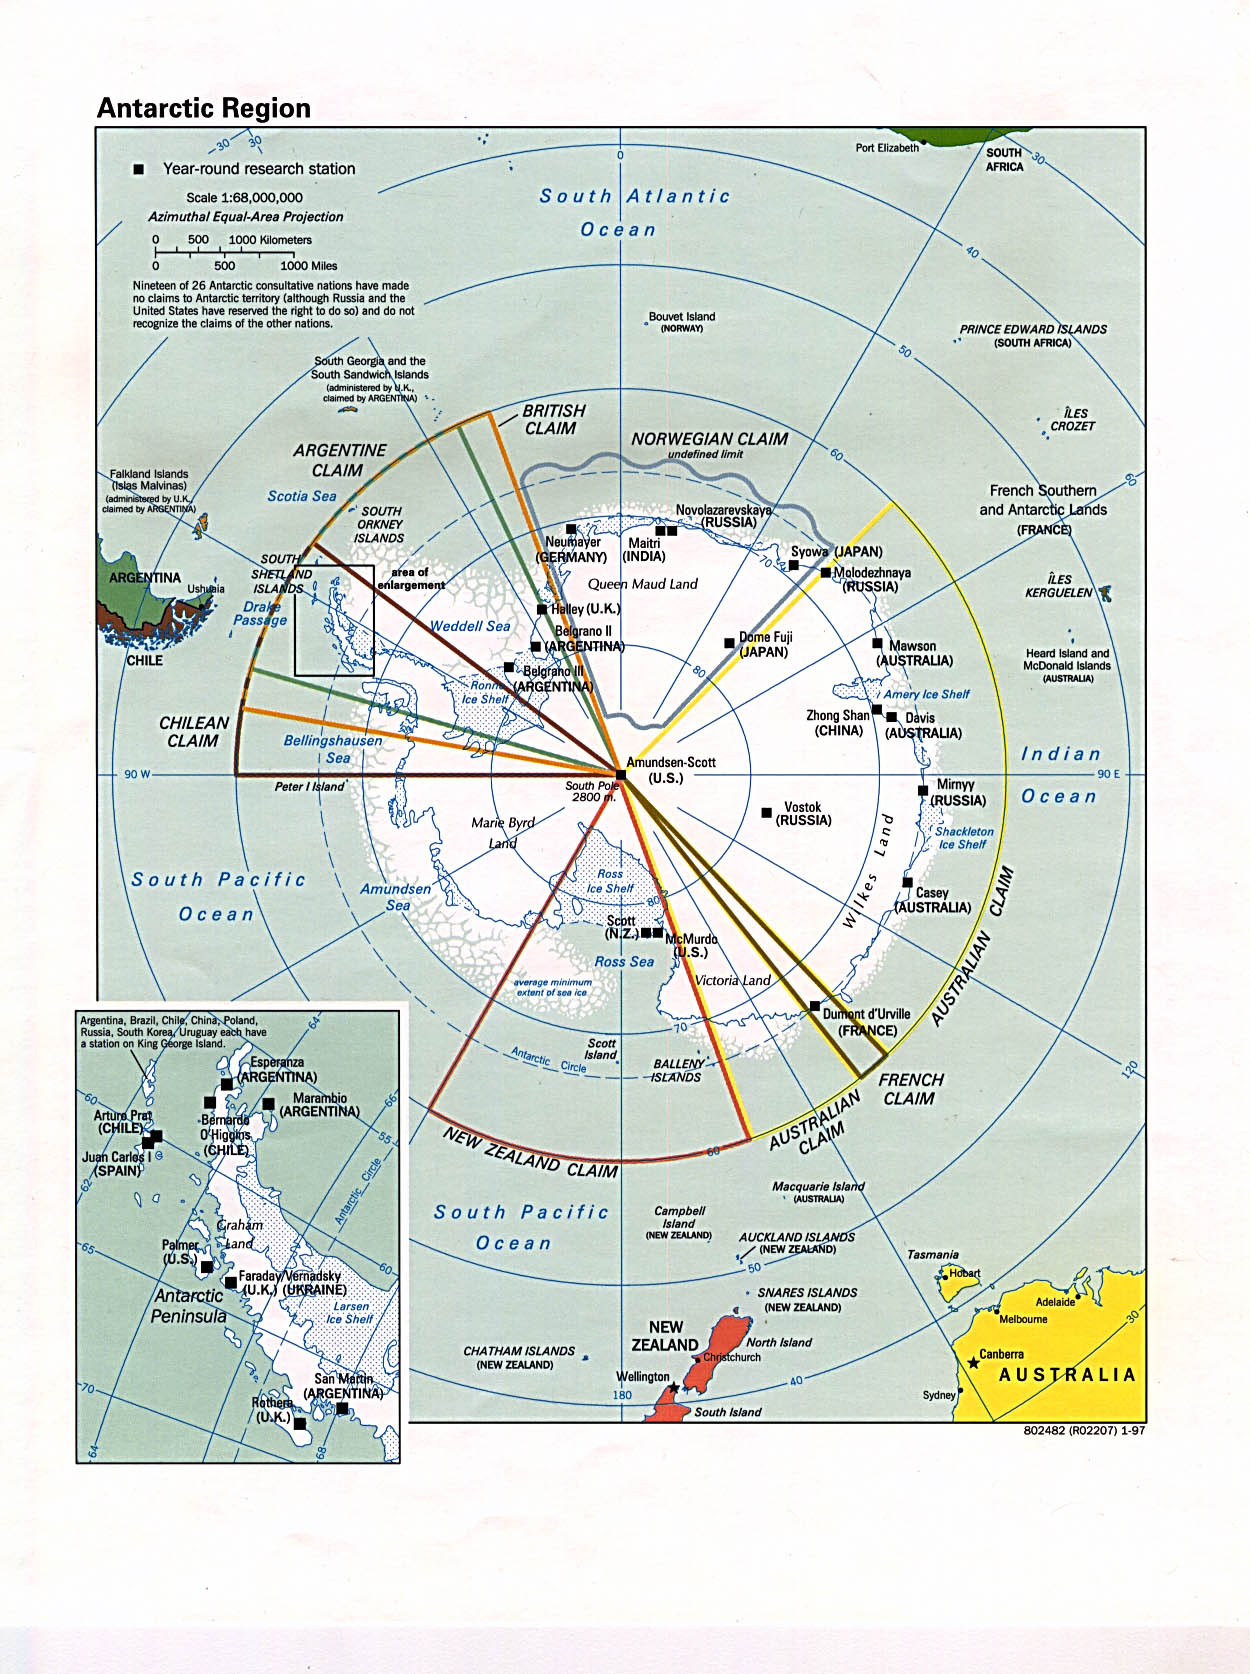 Mapa Politico de la Antártida 1997